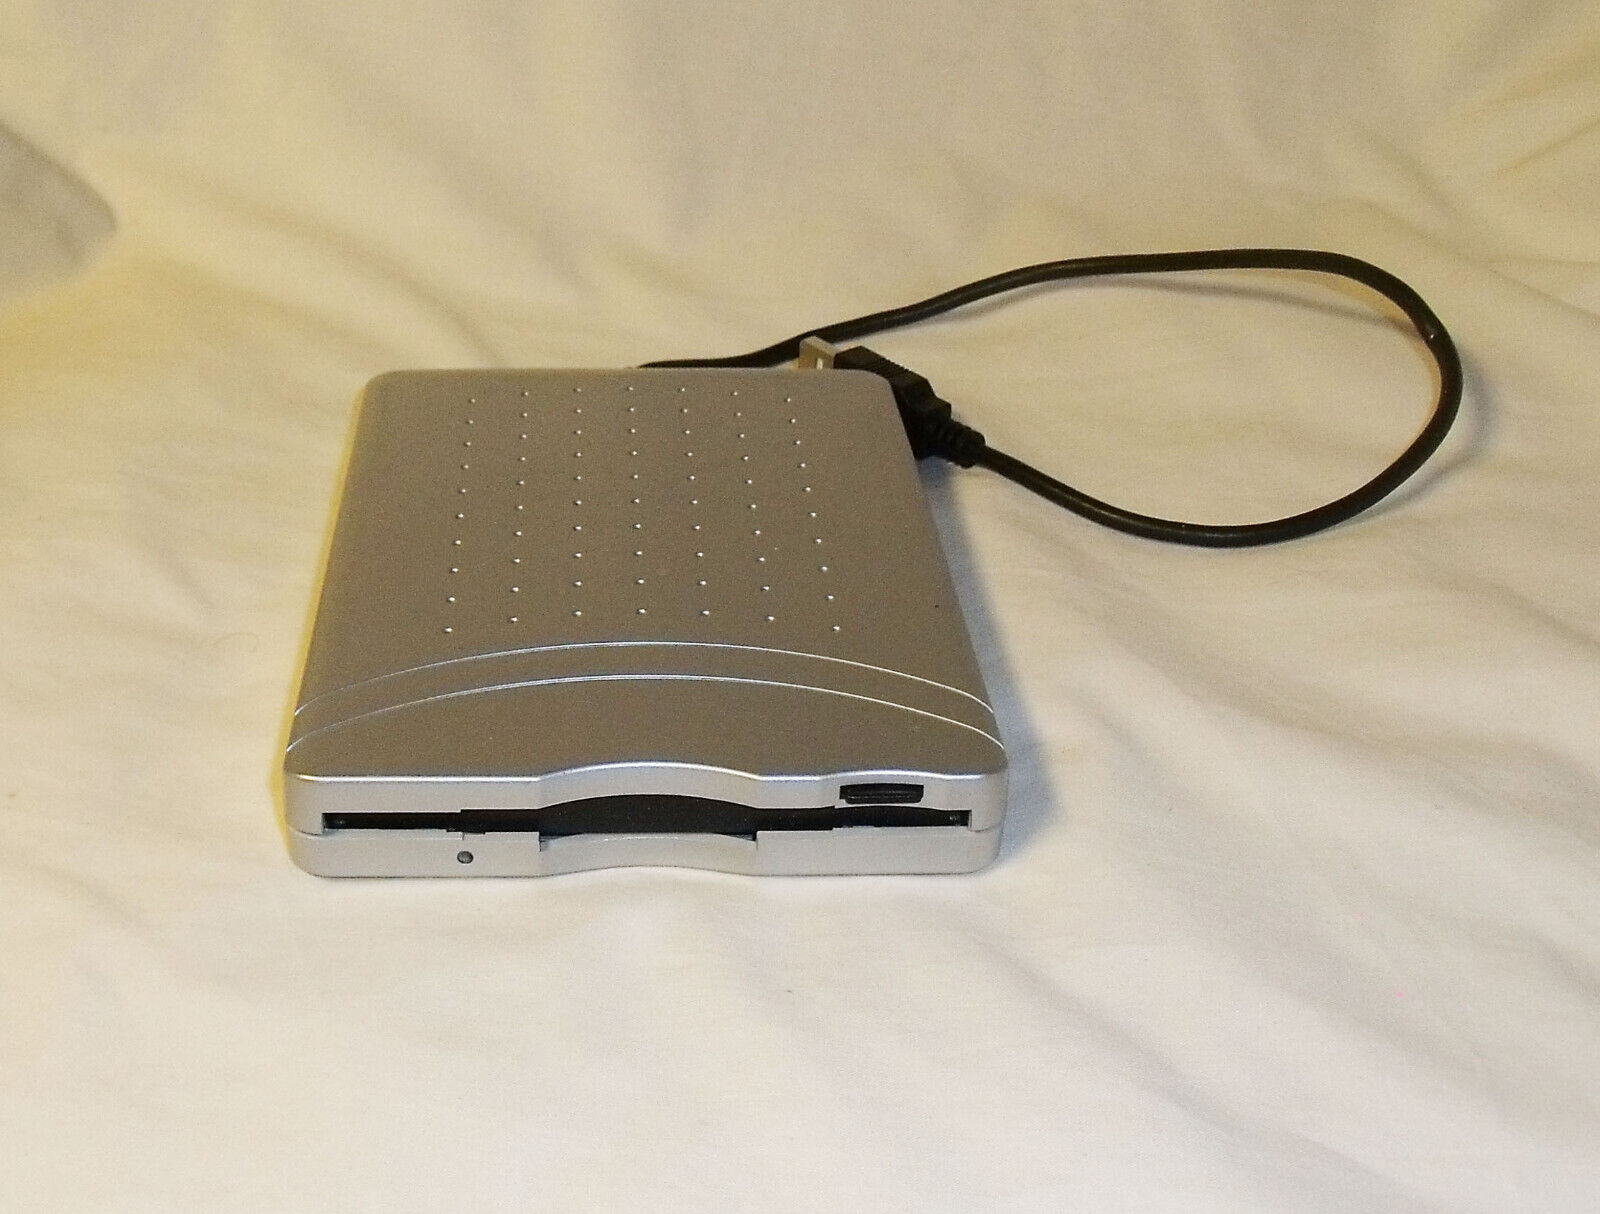 Dynex Slim USB External HD 3.5 inFloppy Disk Drive (DX-EF101) Tested (used)